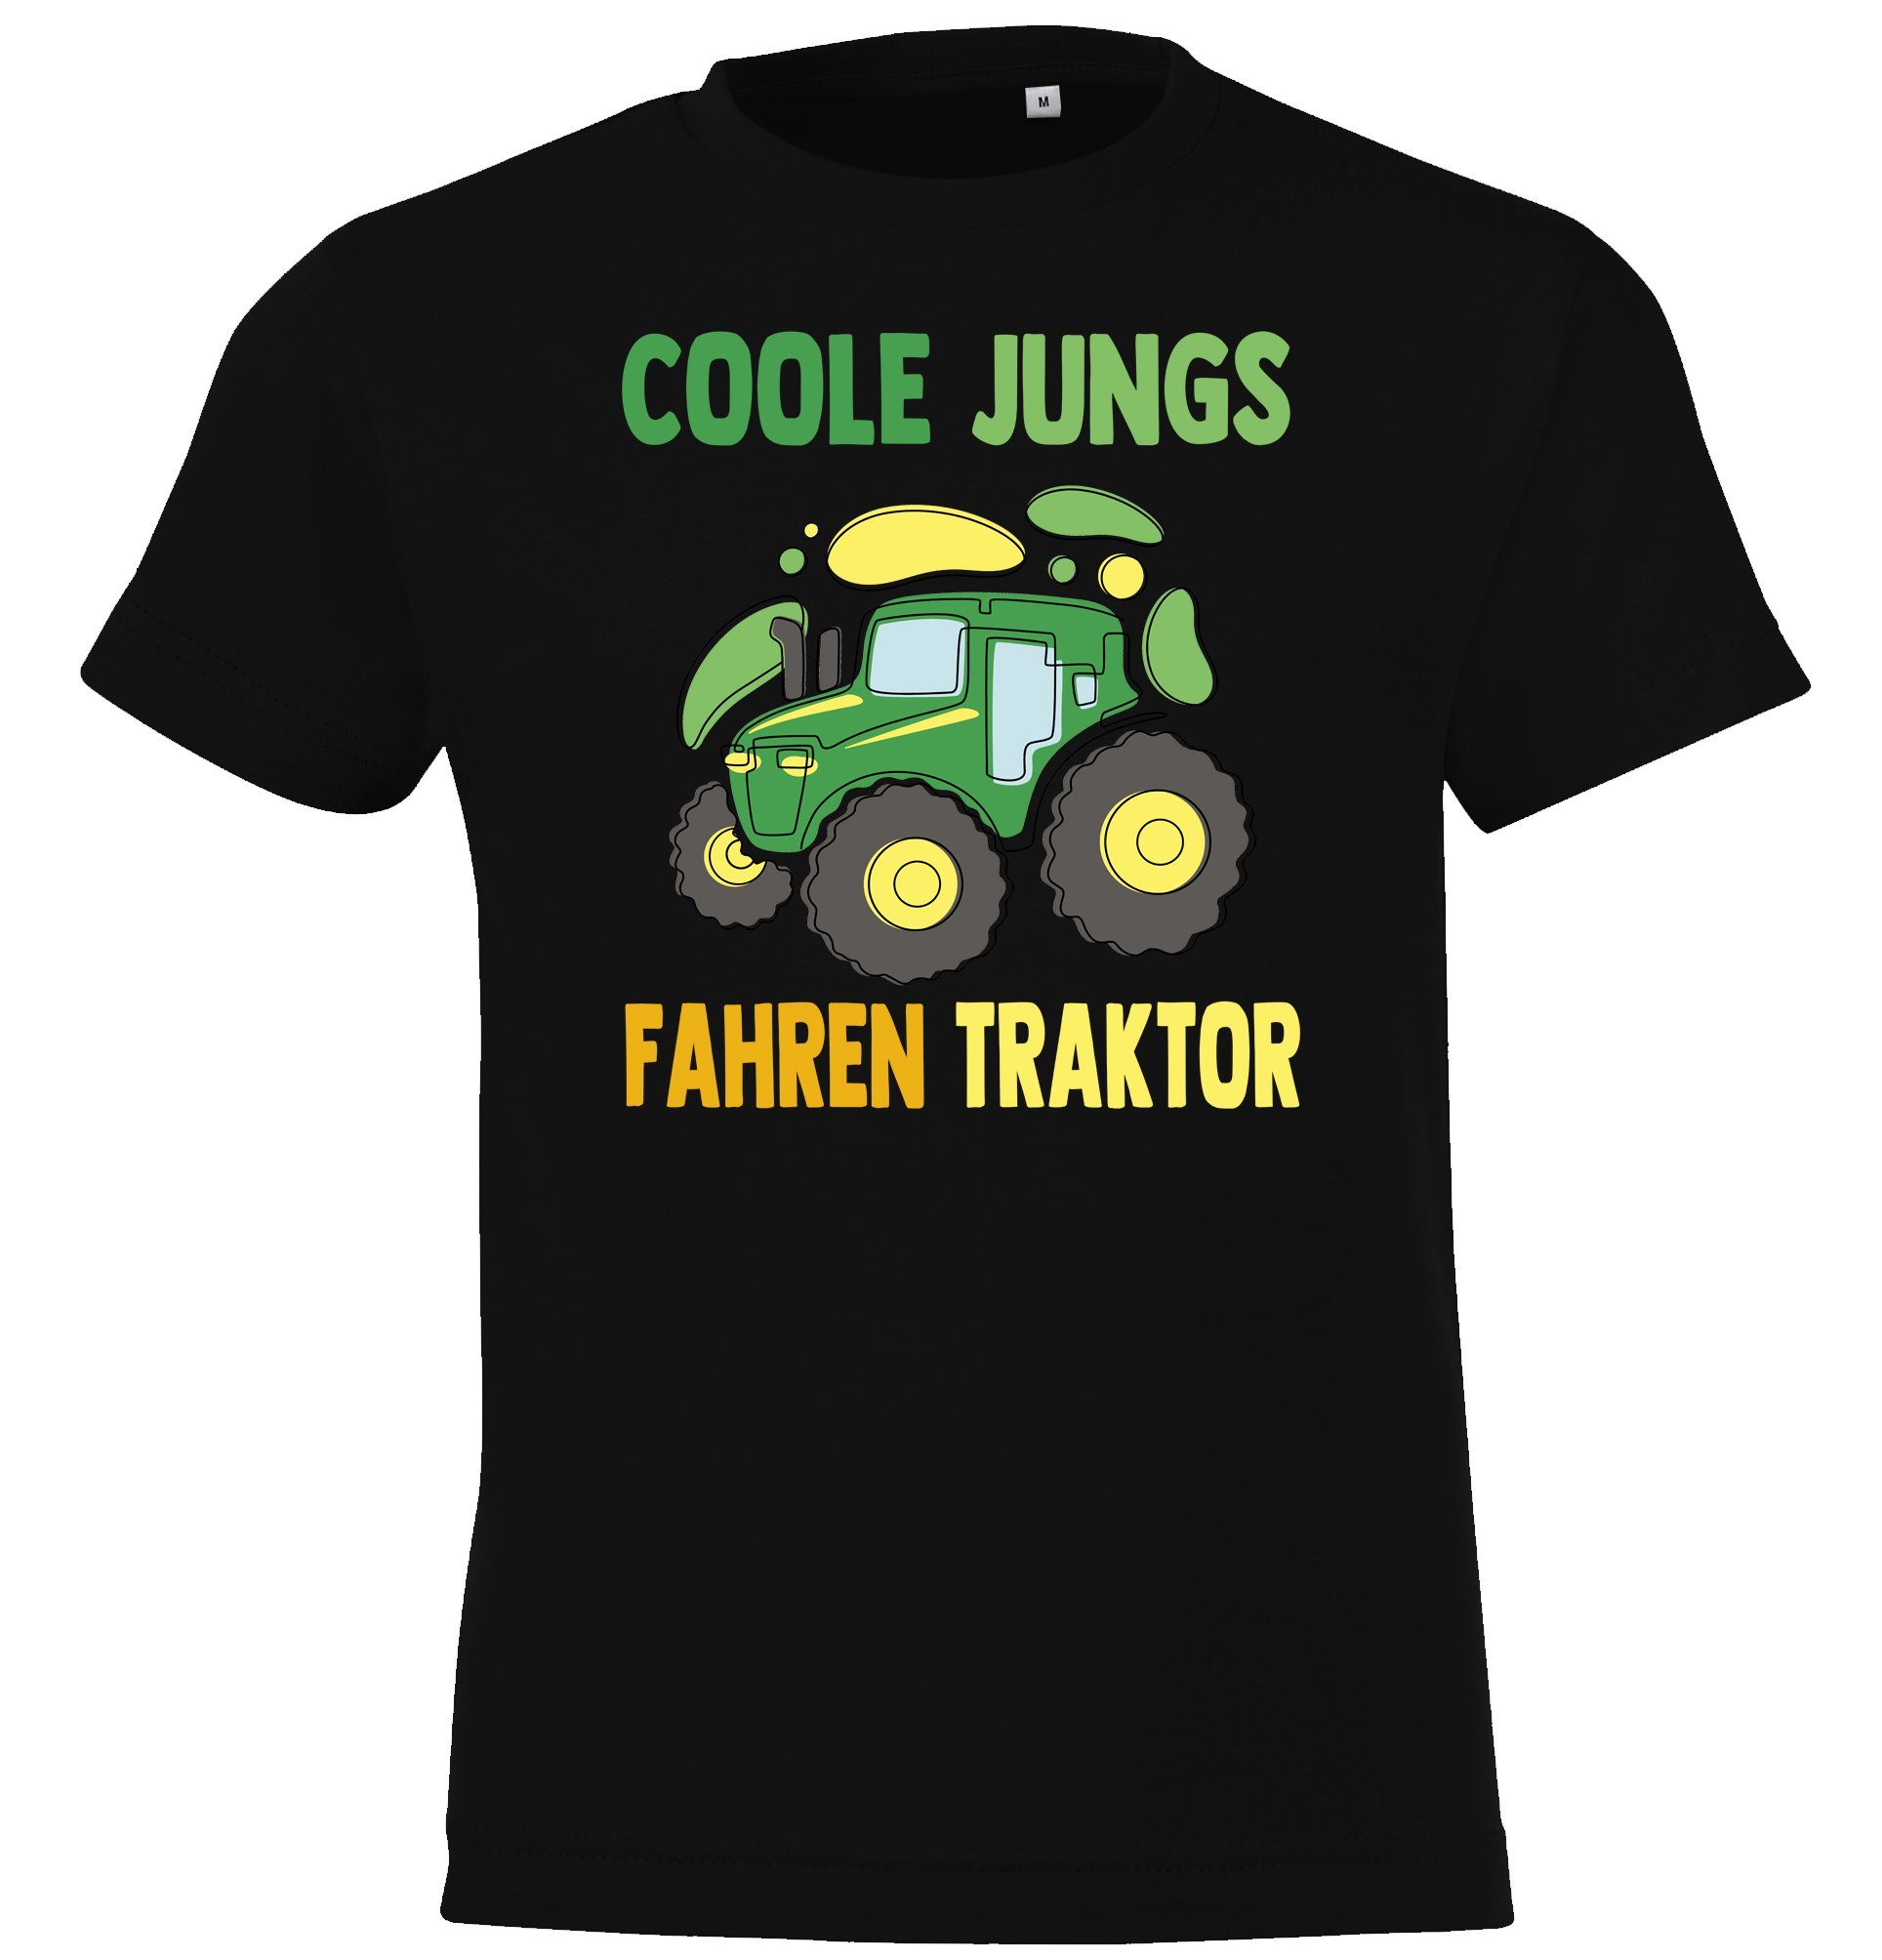 mit Frontprint T-Shirt Jungs Schwarz Coole Shirt Fahren Kinder Youth Designz Traktor trendigen